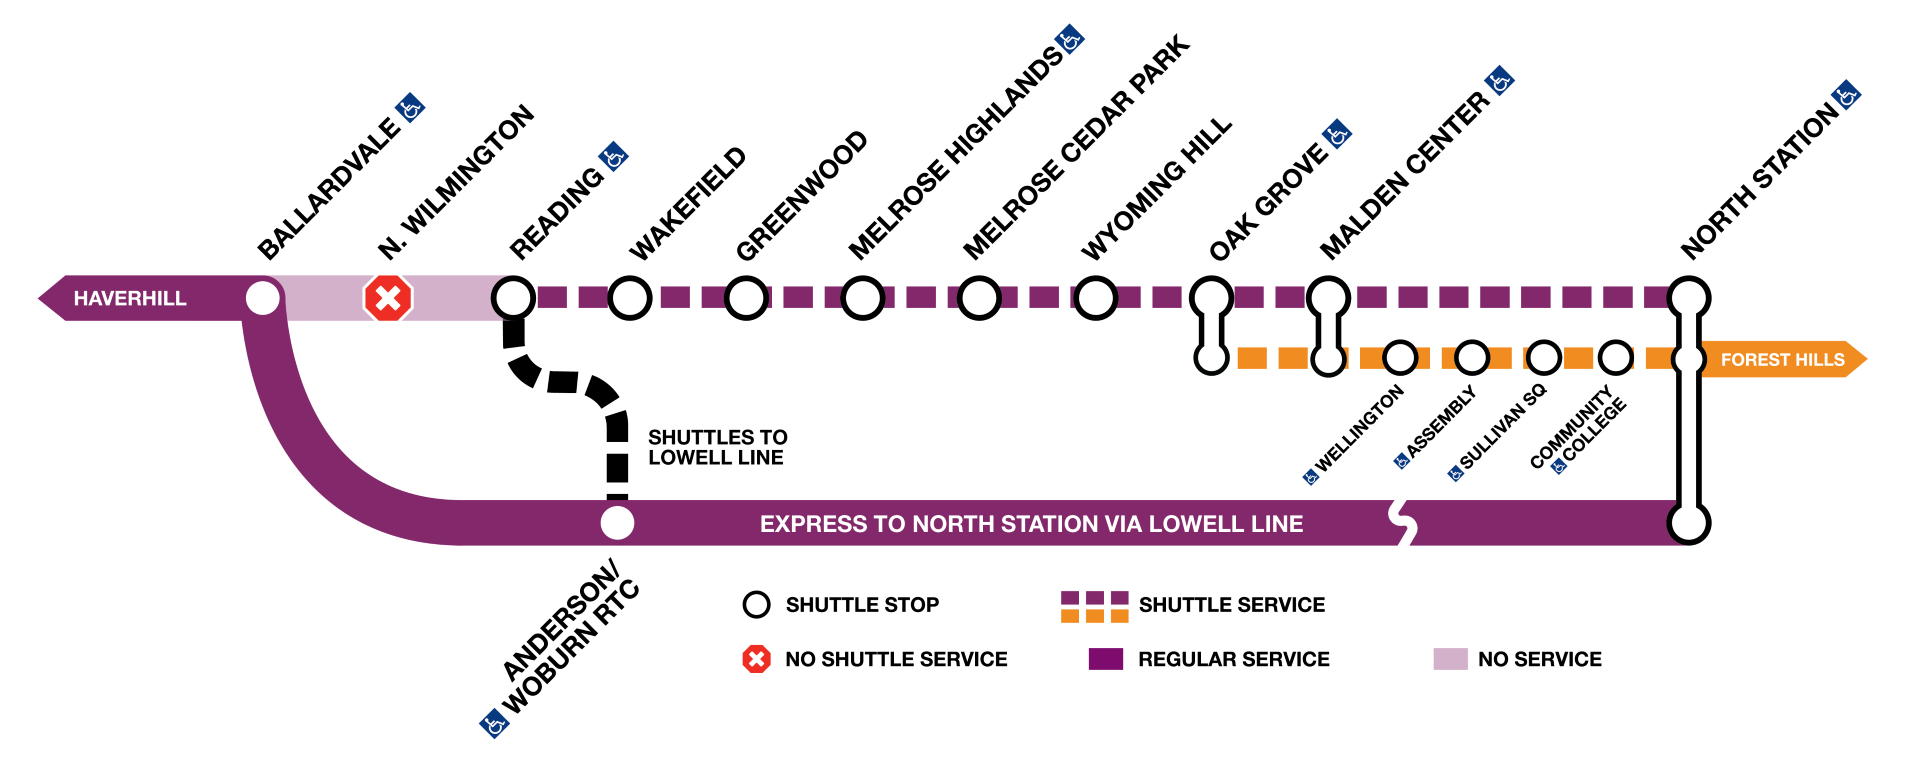 Orange Line diversion diagram with Haverhill and shuttle service